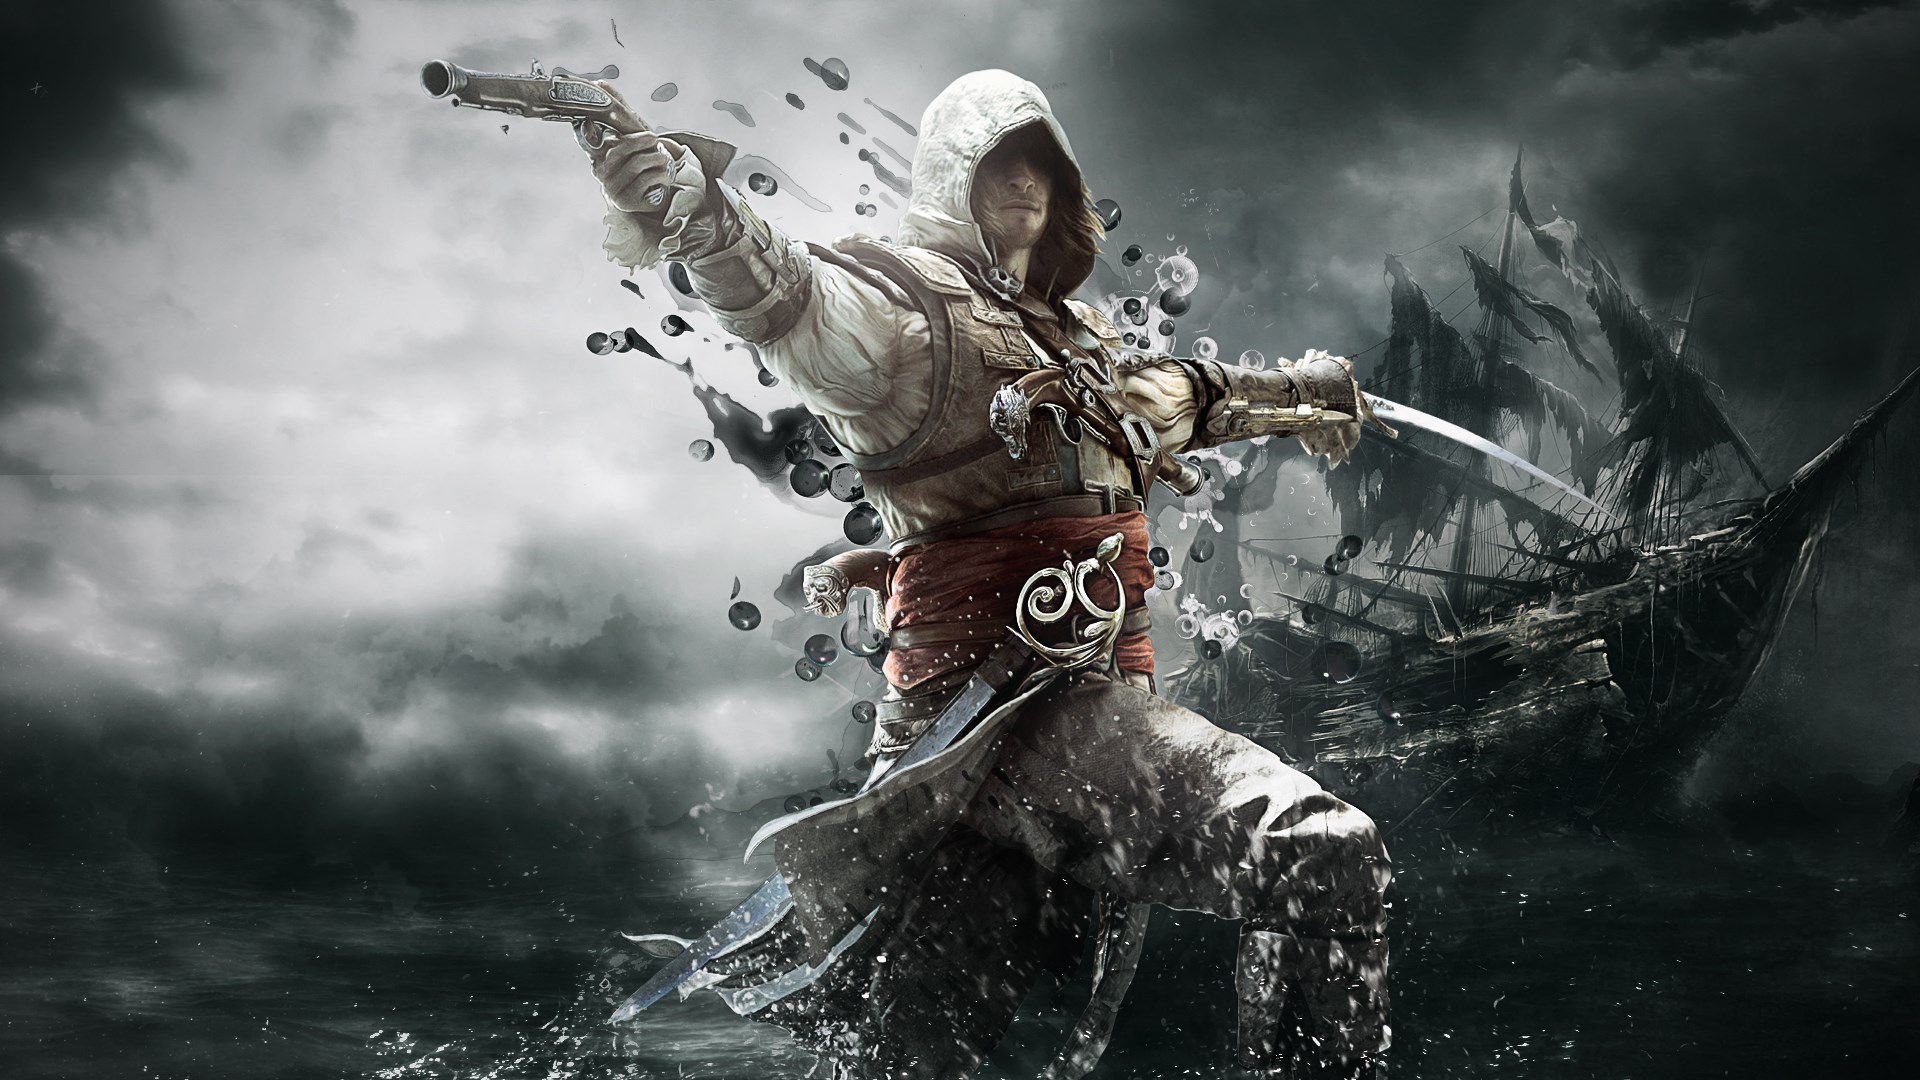 Assassins Creed Wallpaper HD - WallpaperSafari